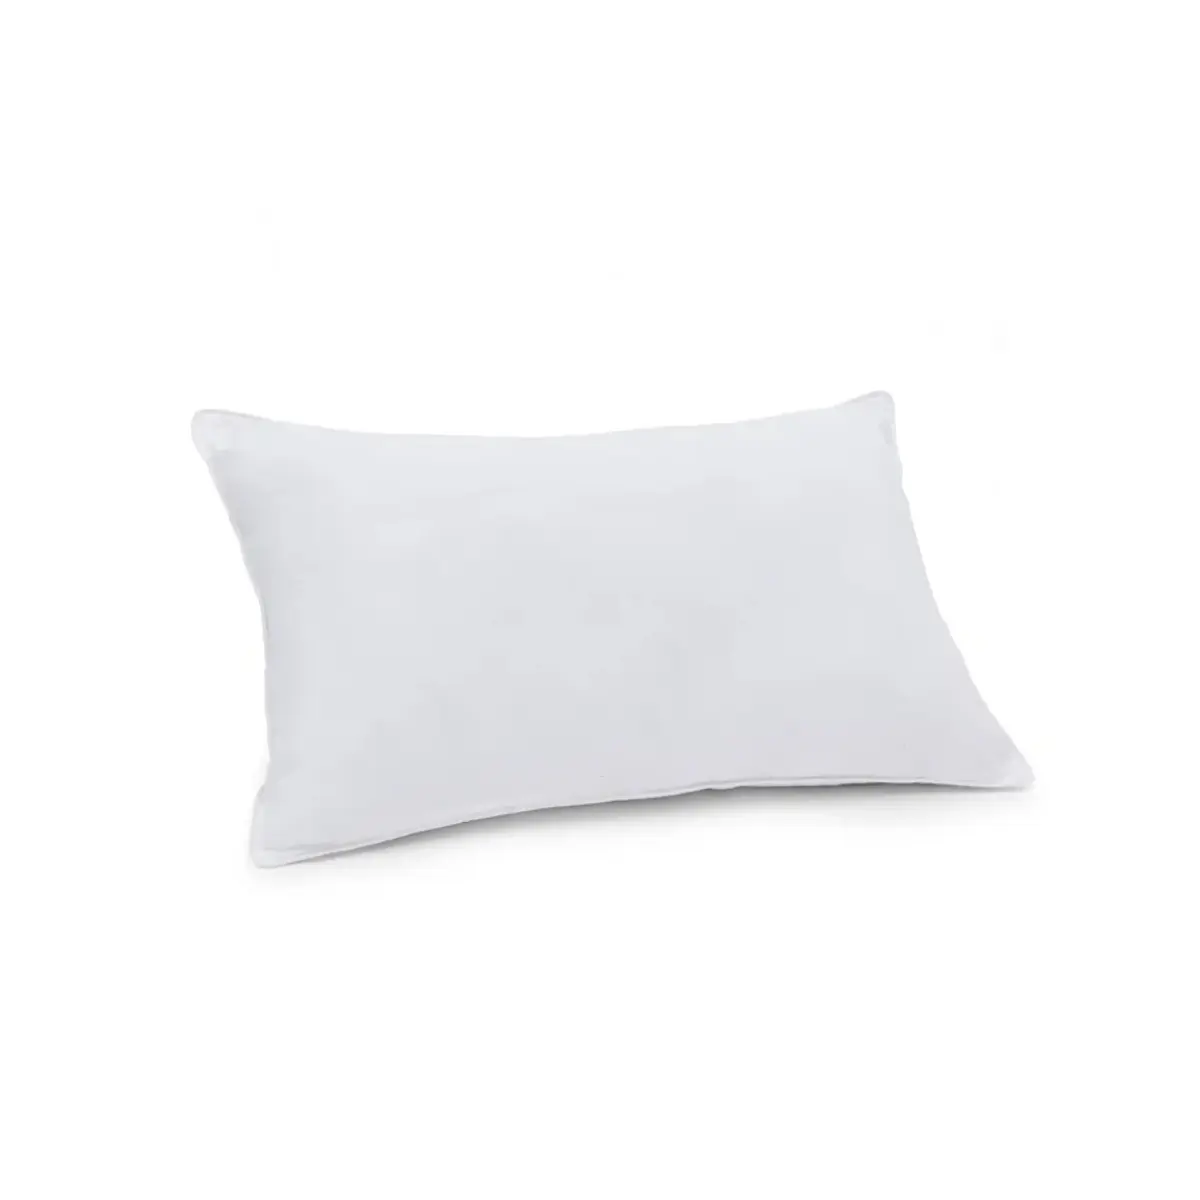 Image of Martex Baby Temperature Regulating Pillow-White